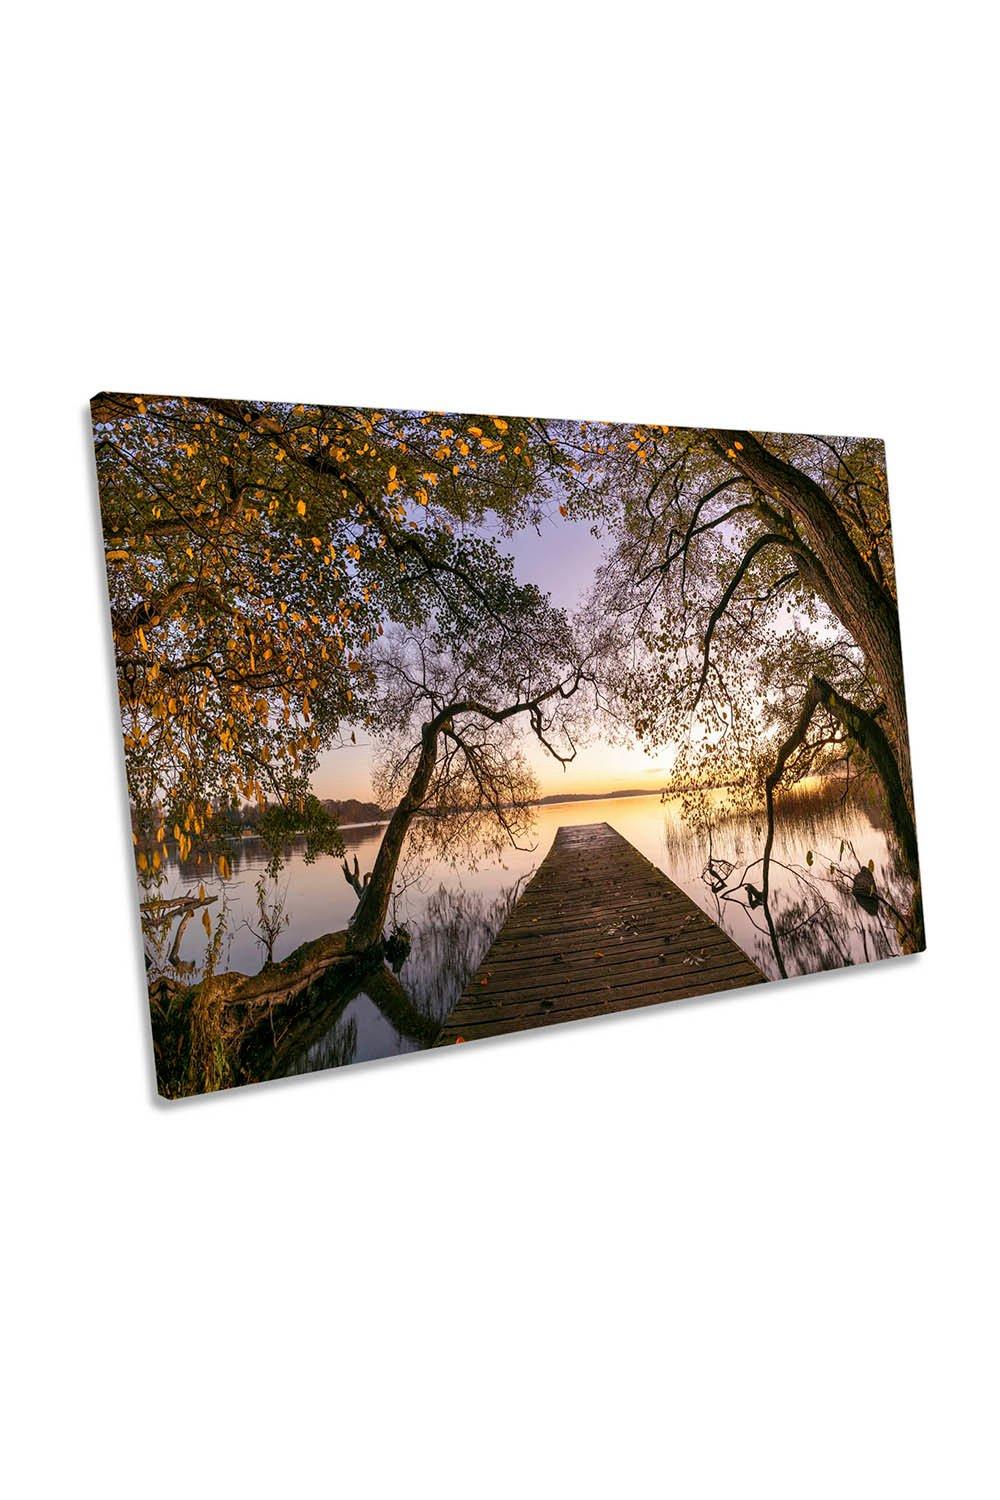 Autumn Lake View Sunset Landscape Canvas Wall Art Picture Print